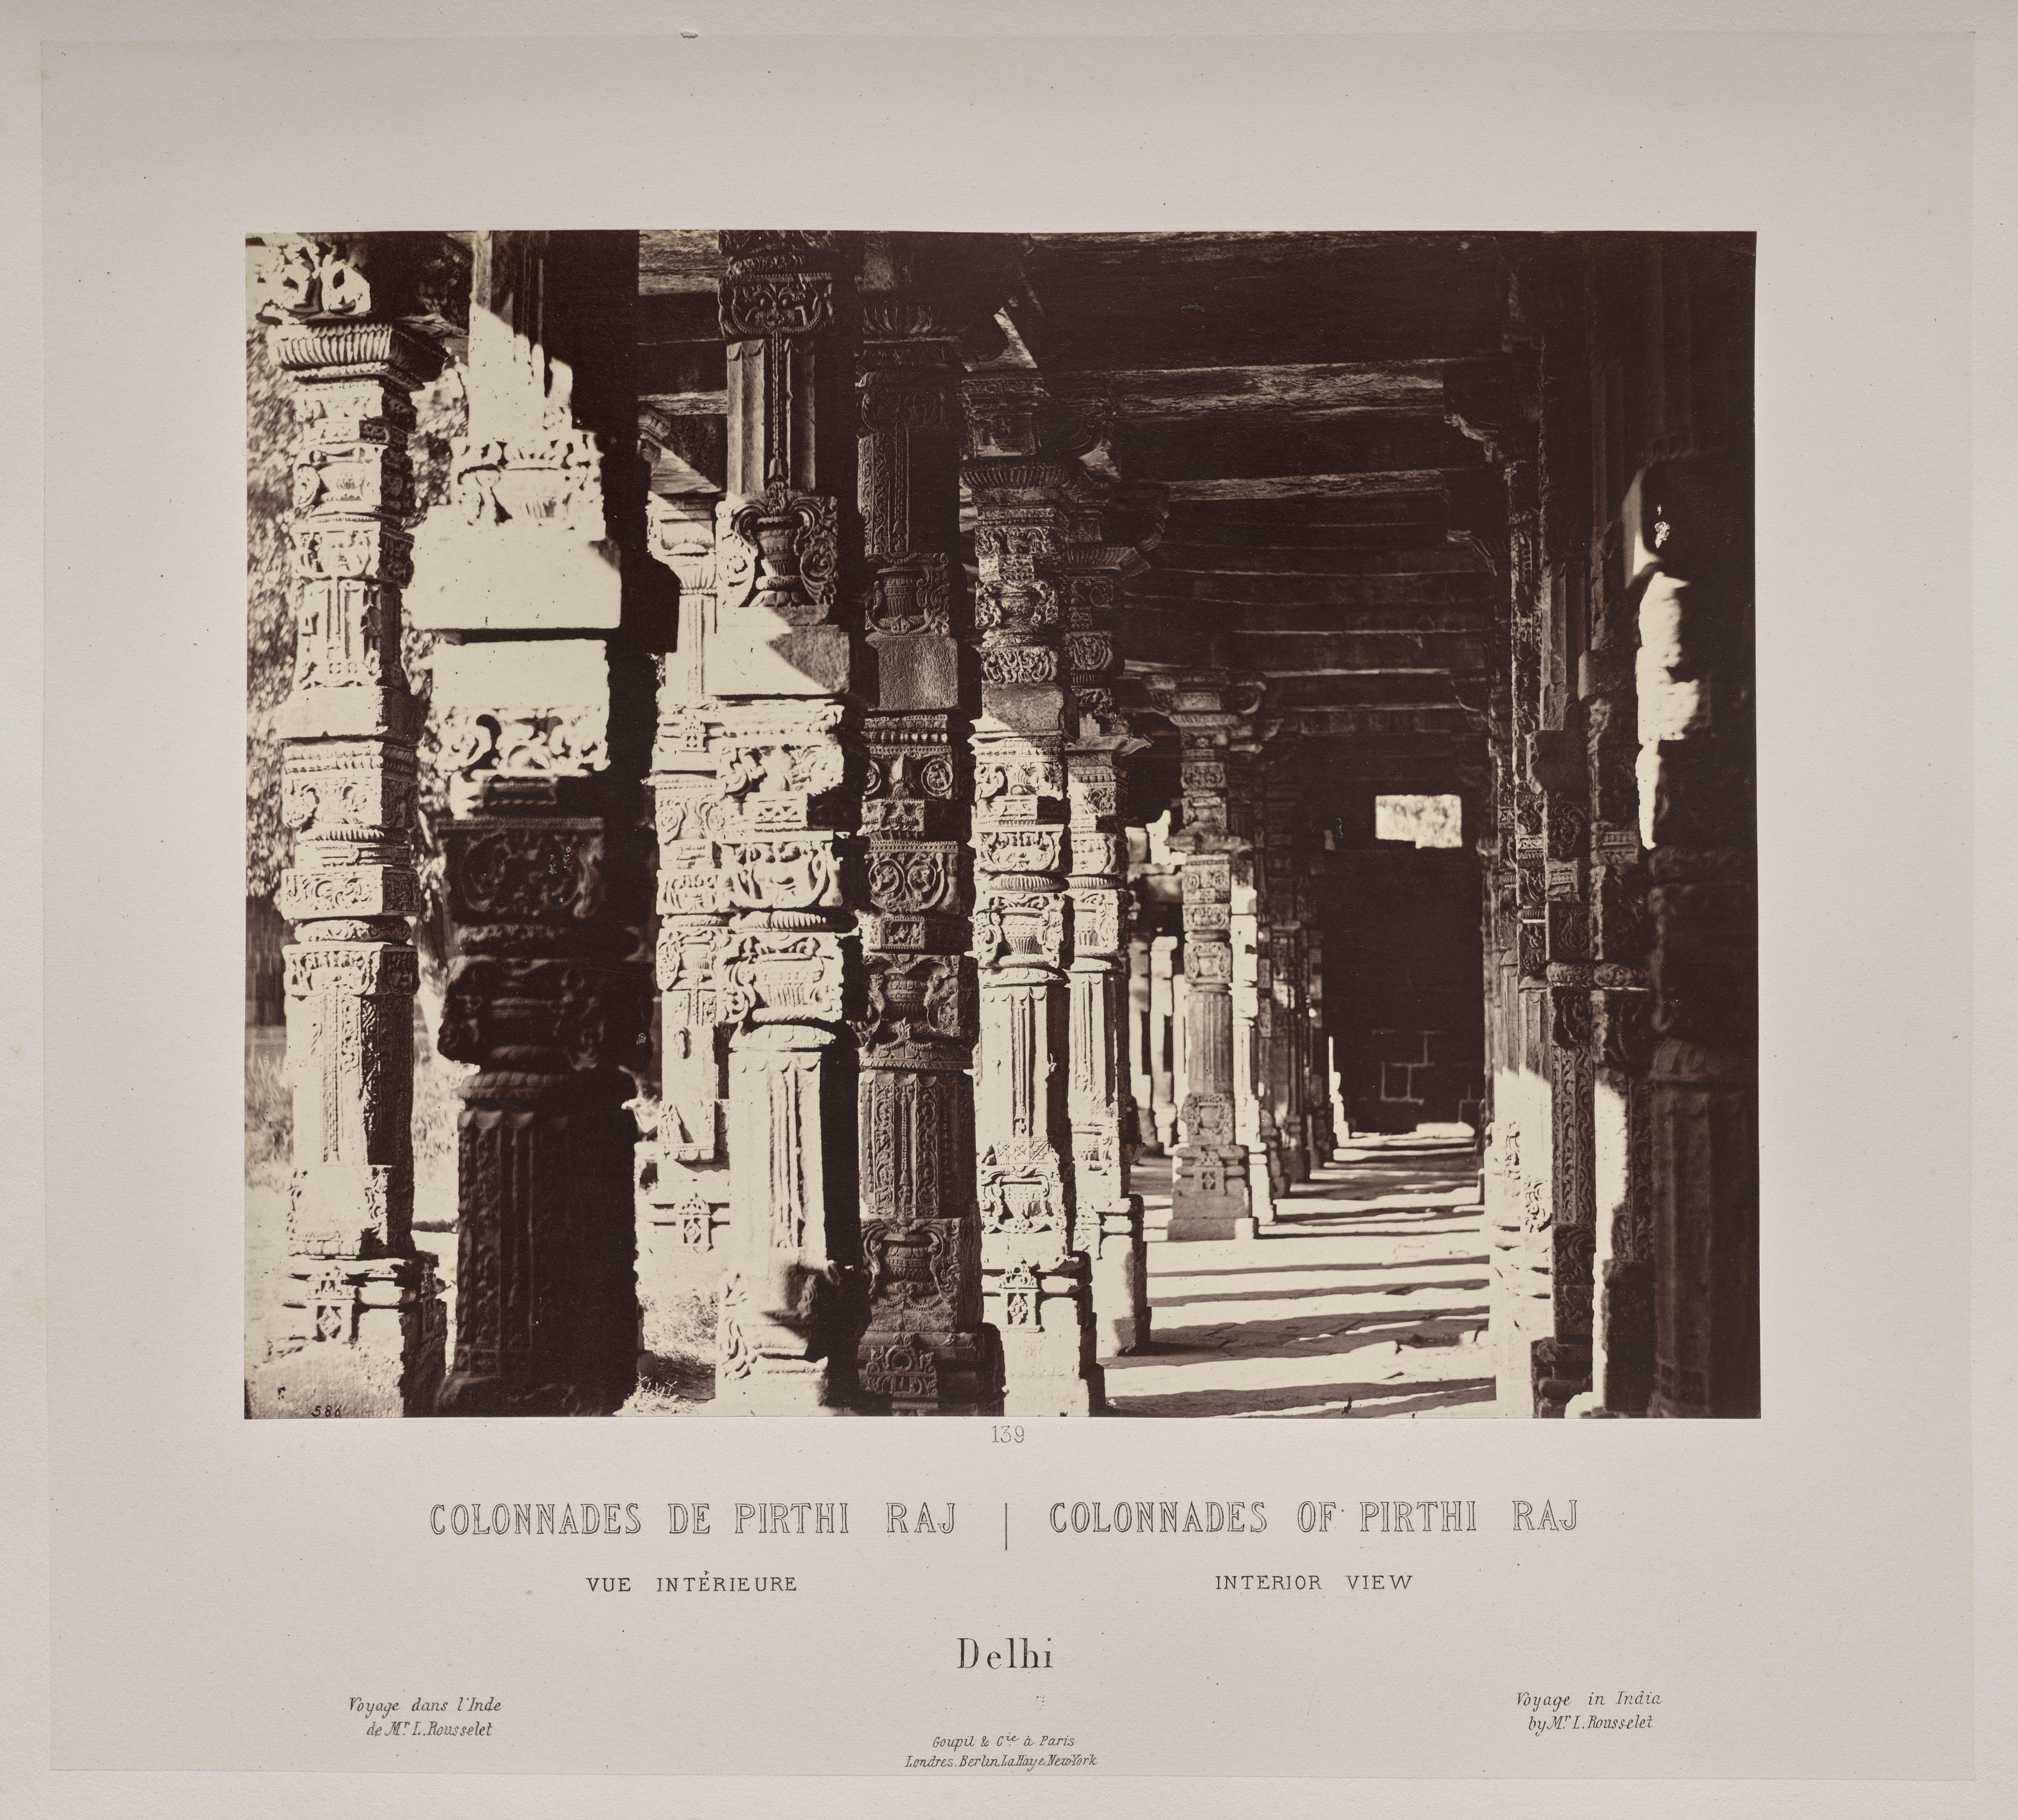 Colonnades of Pirthi Raj, Interior View, Delhi